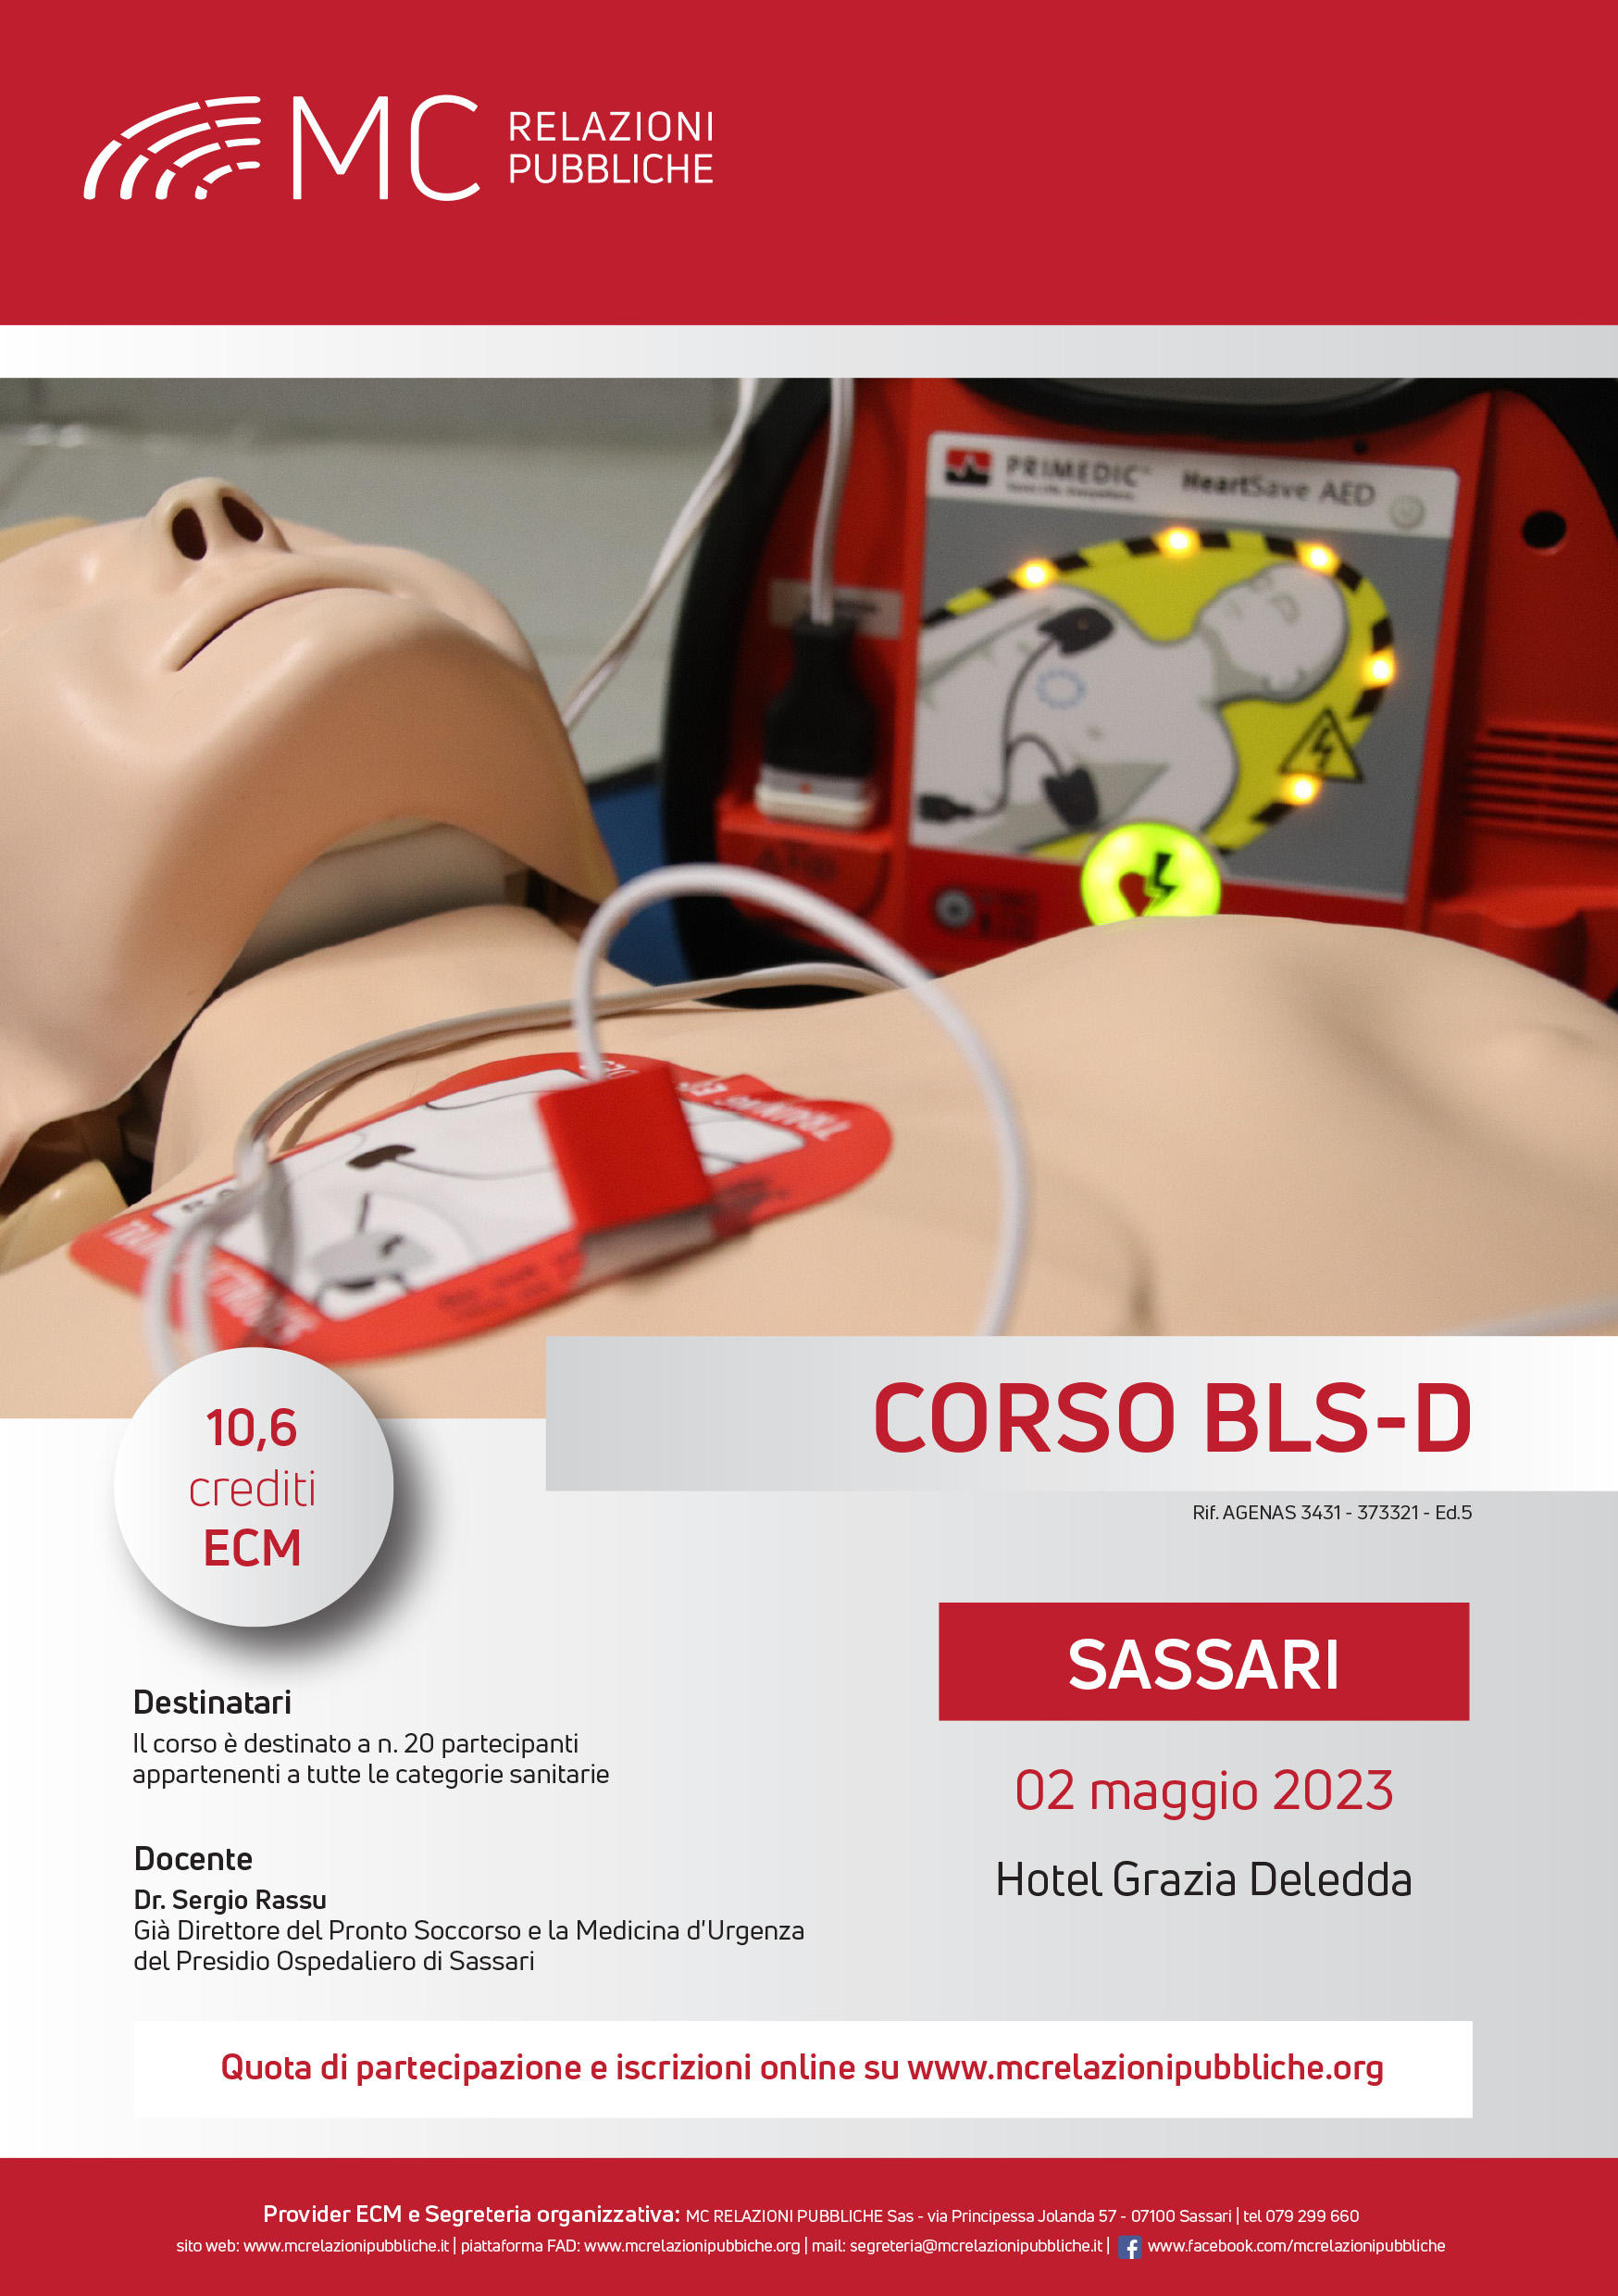 Corso BLS-D. Basic Life Support-Defibrillation - 2 maggio 2023